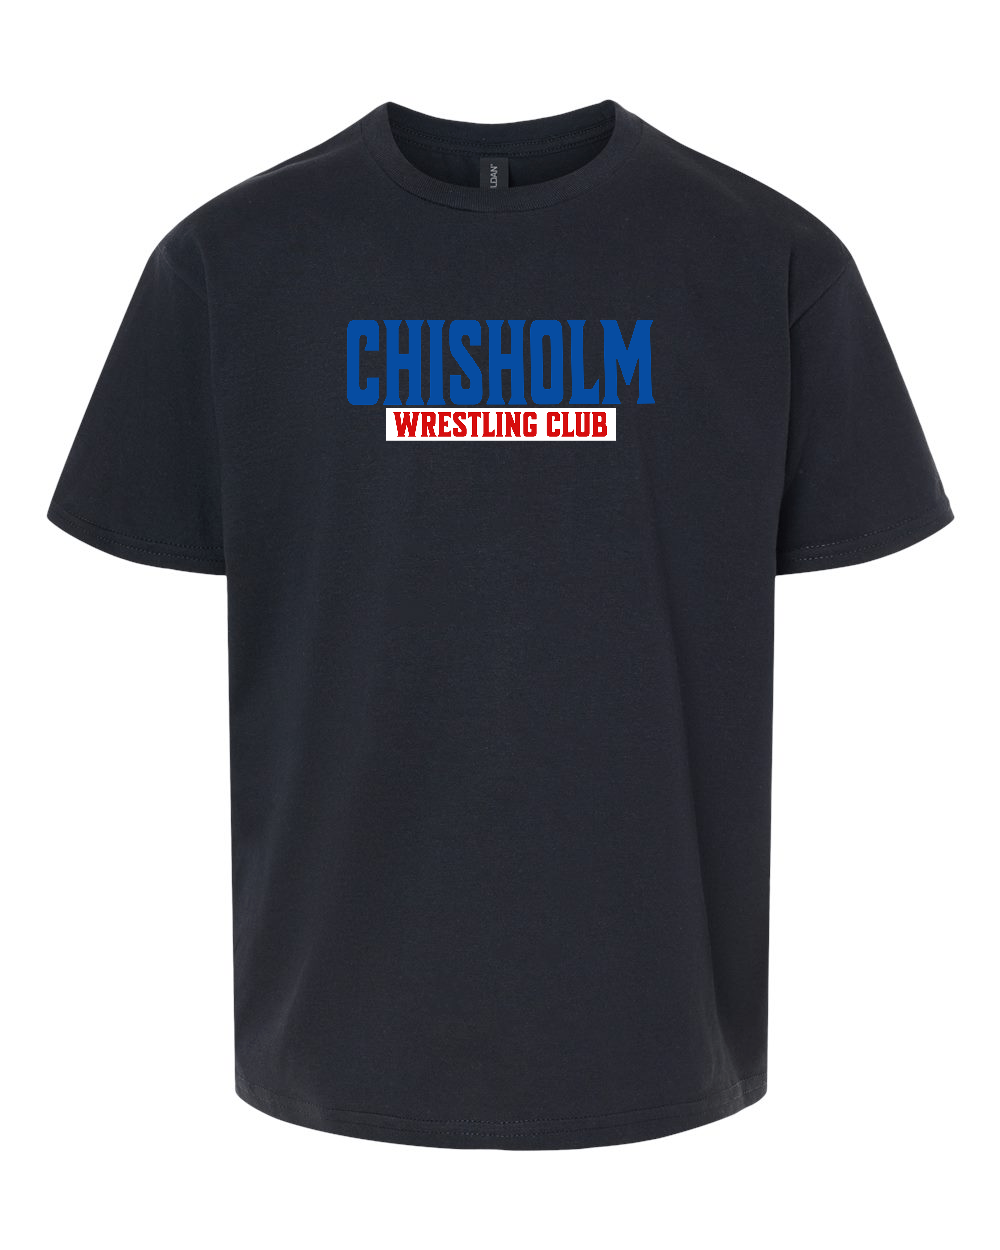 Chisholm Wrestling Club - Youth T-shirt